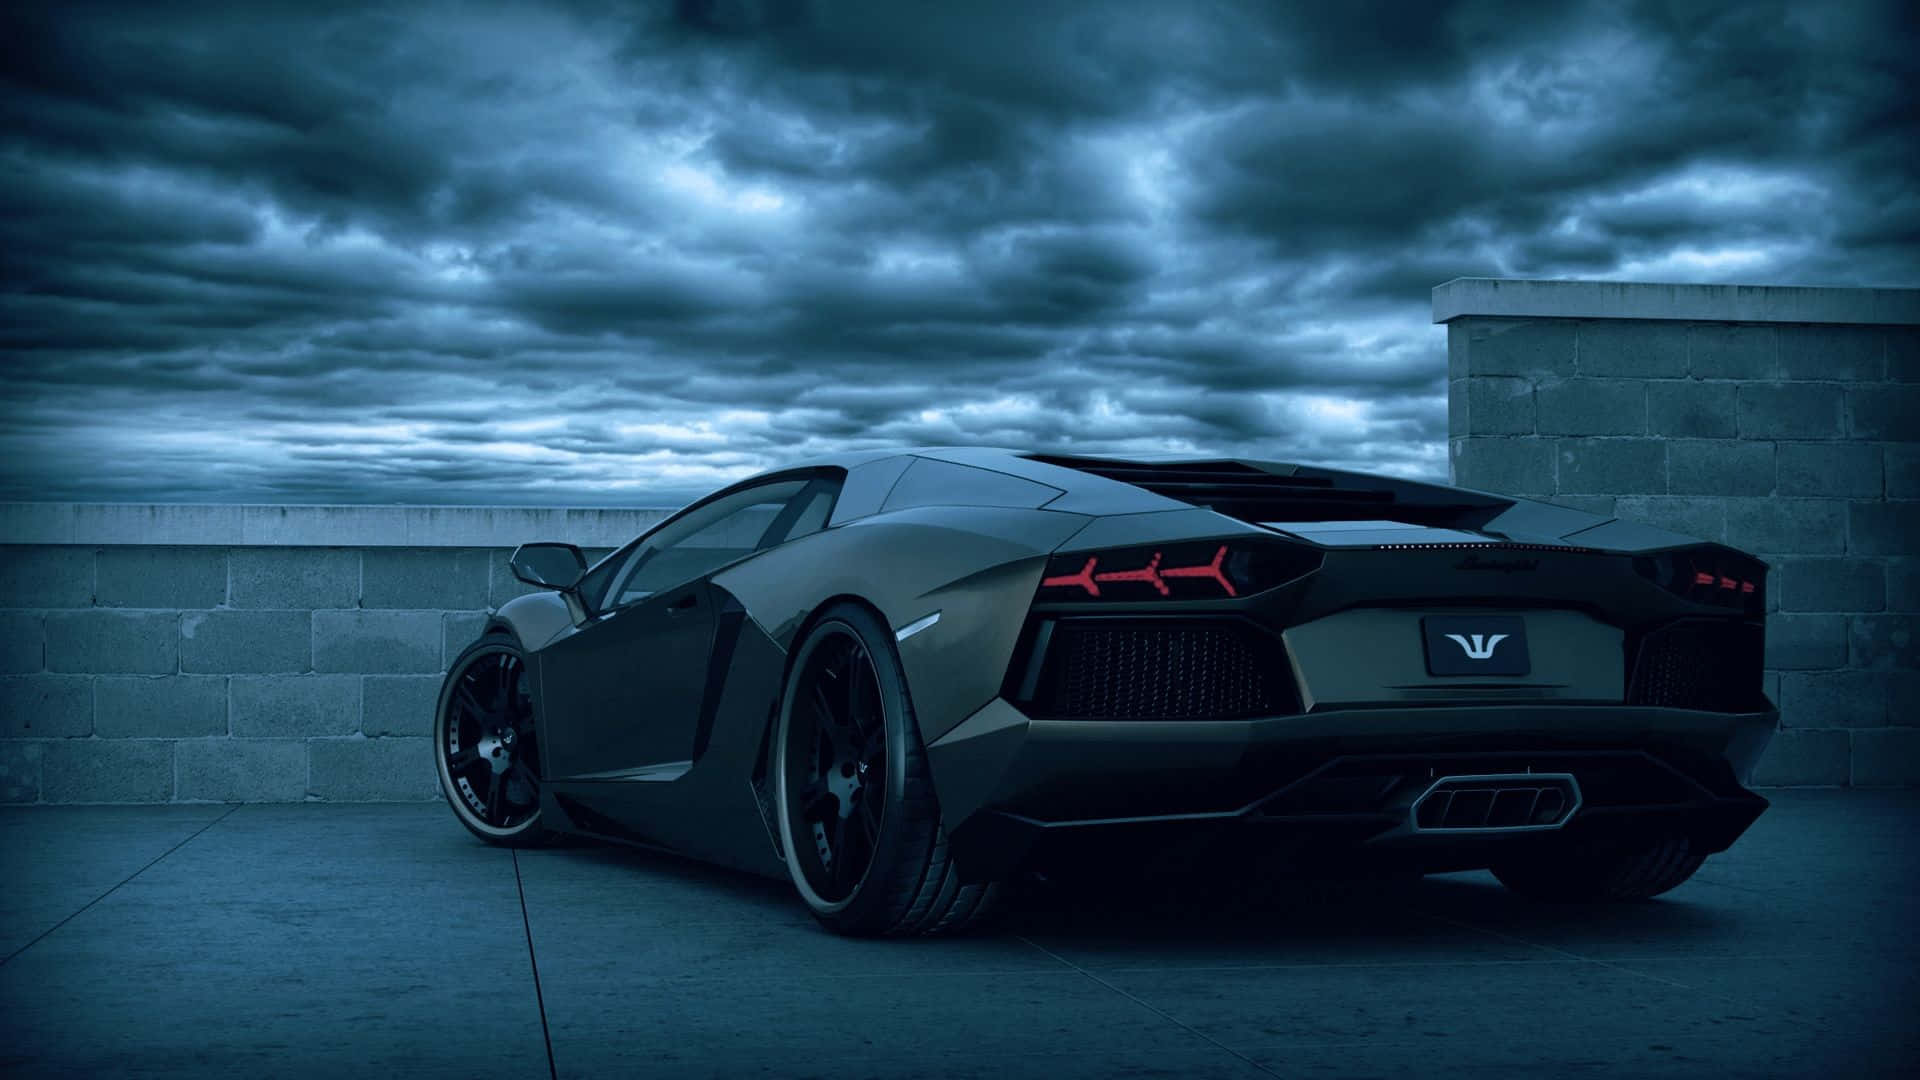 "Feel the Power of the Luxurious Lamborghini"